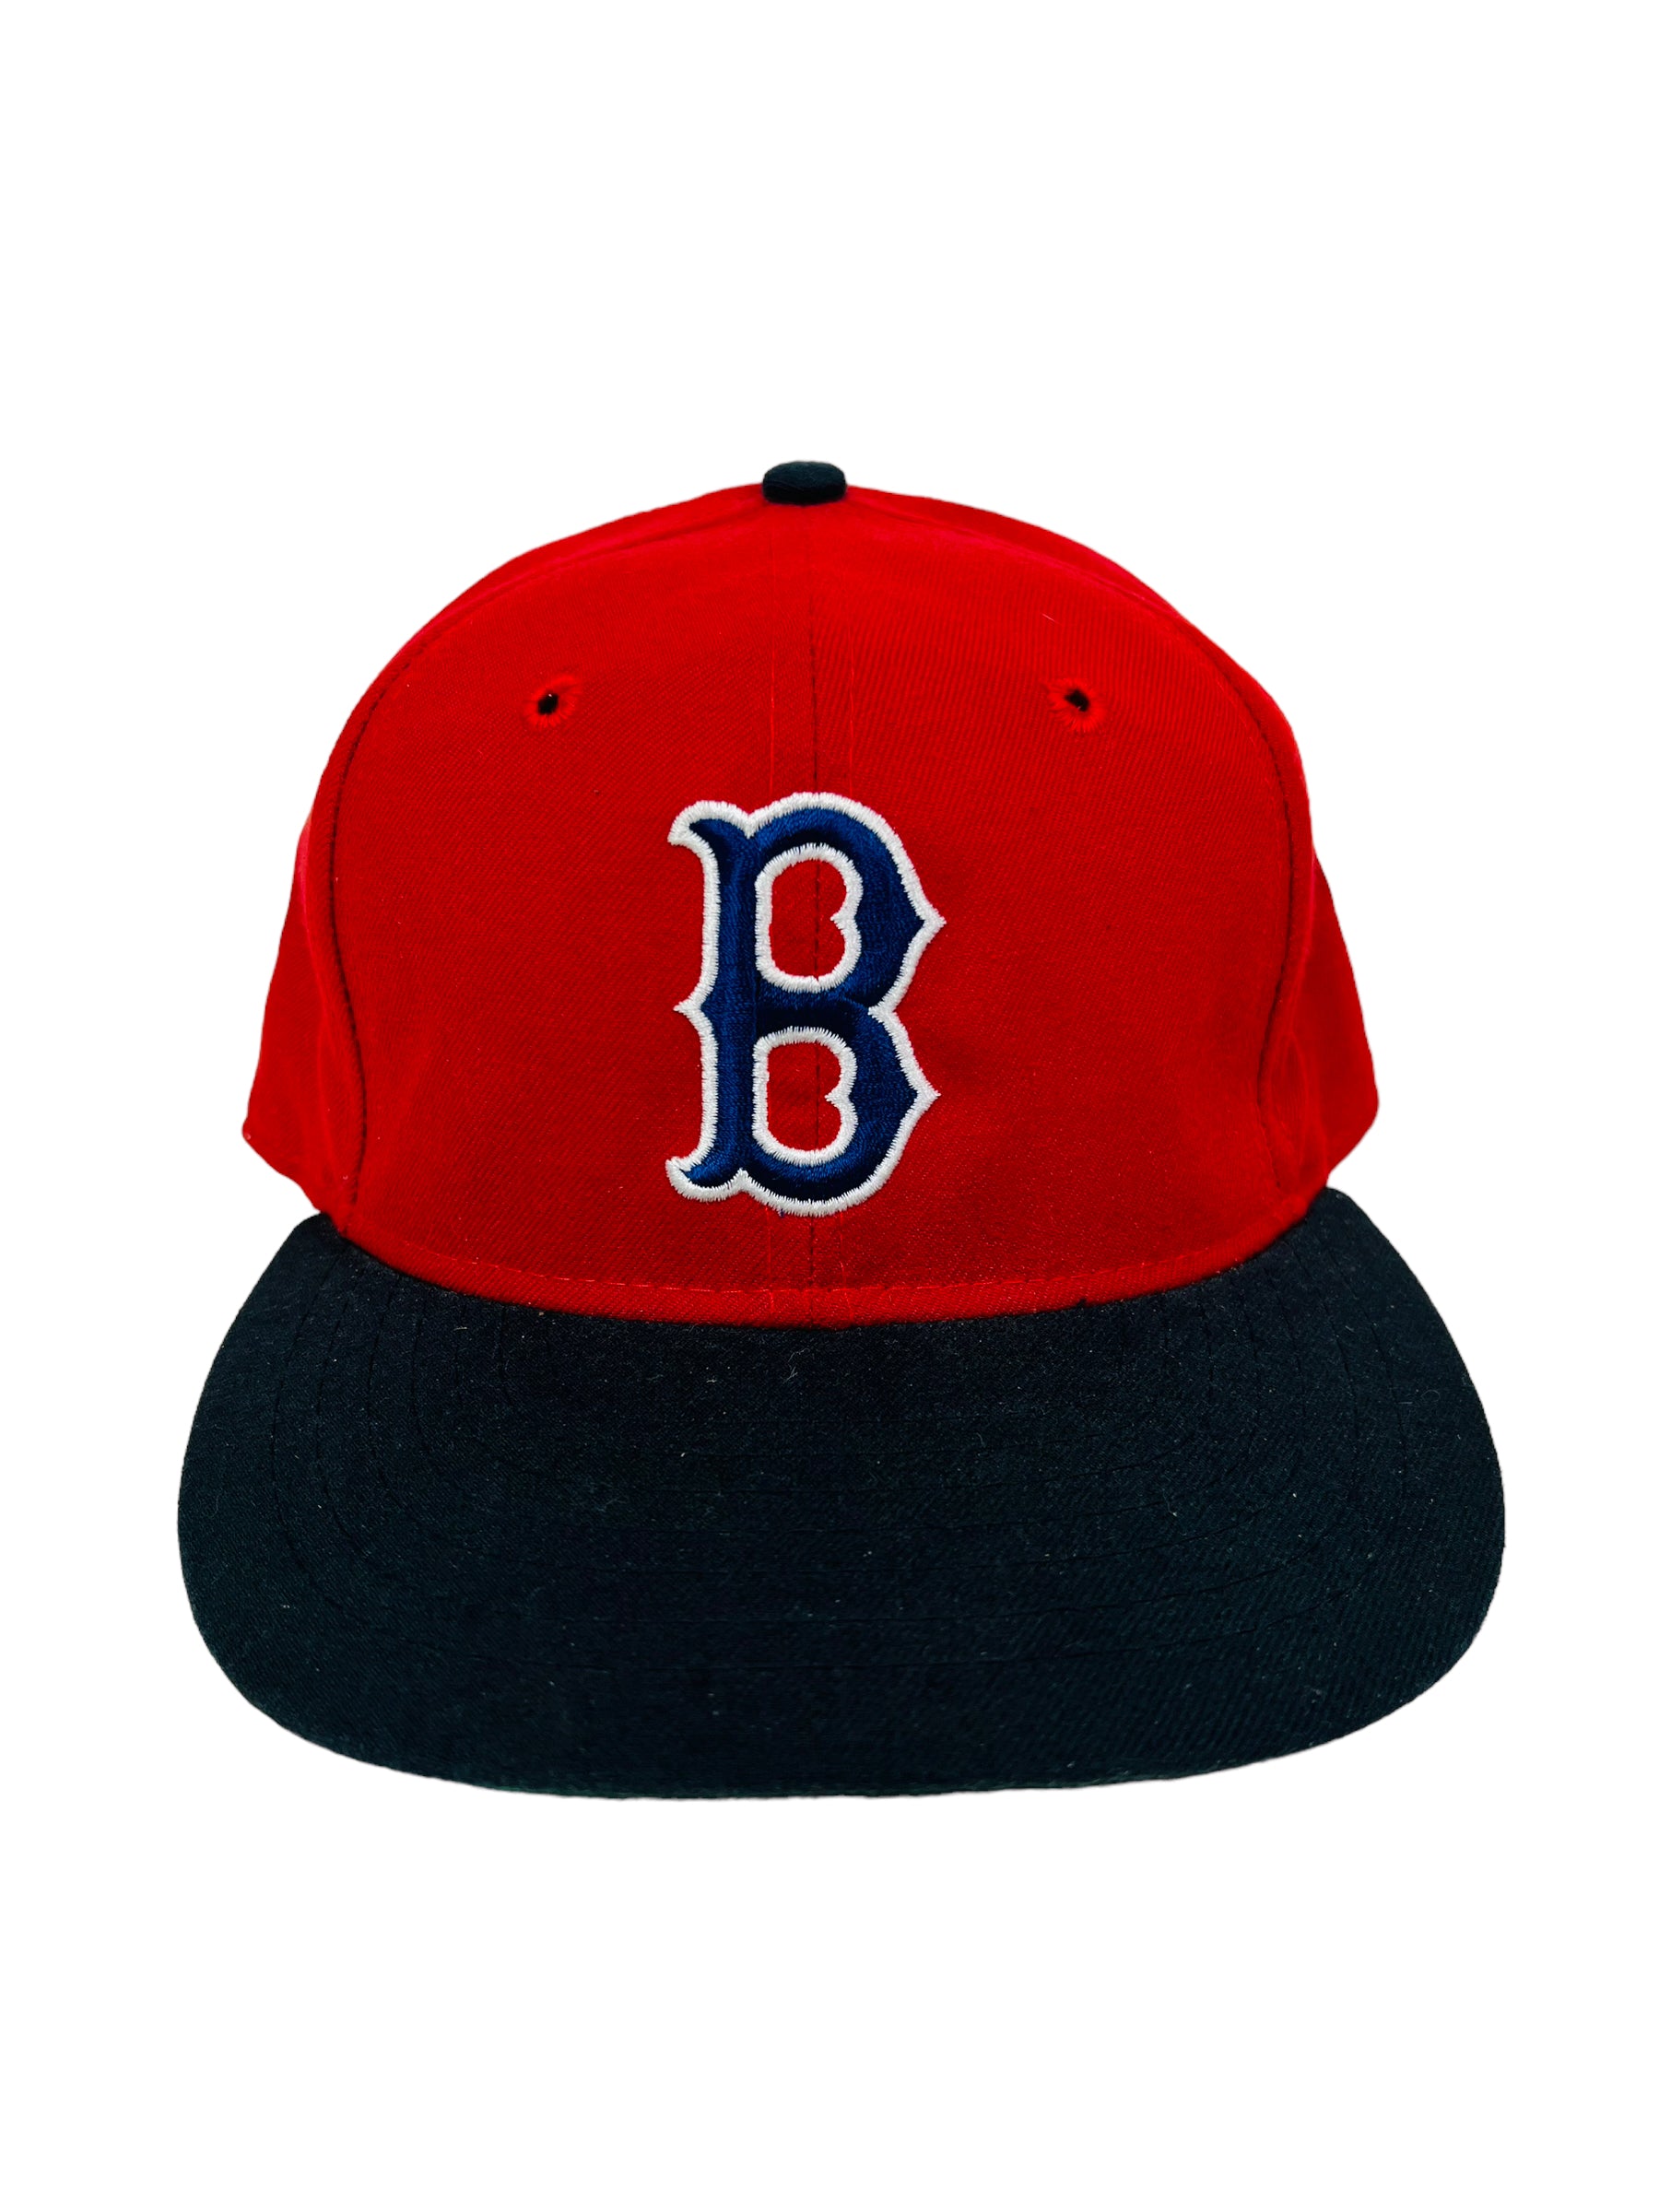 BOSTON RED SOX VINTAGE 90s LOGO 7 MLB BASEBALL TSHIRT ADULT LARGE